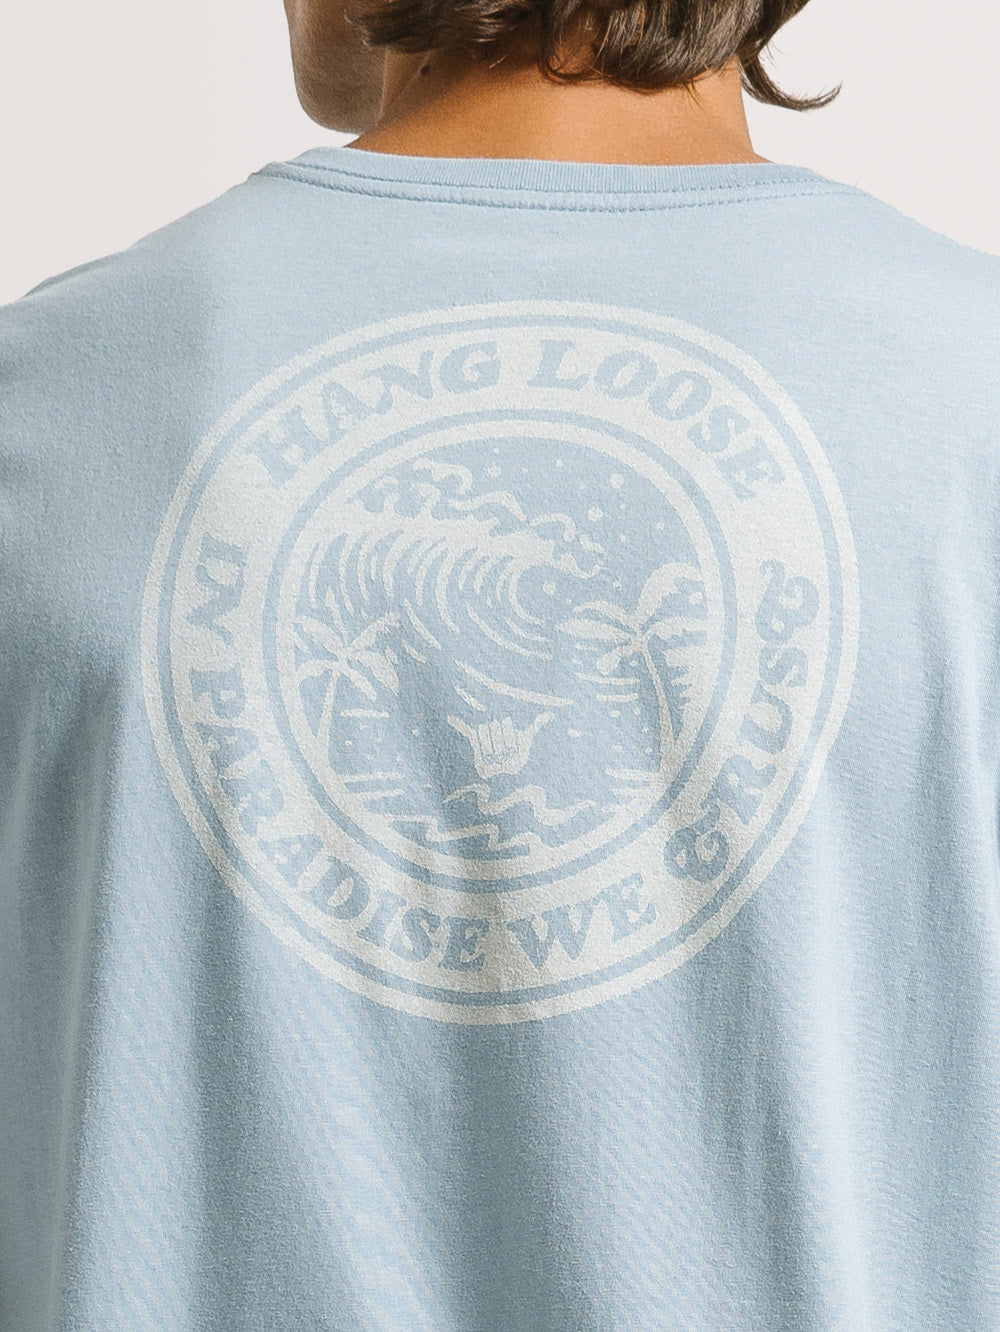 Camiseta Hang Loose Paradise Azul